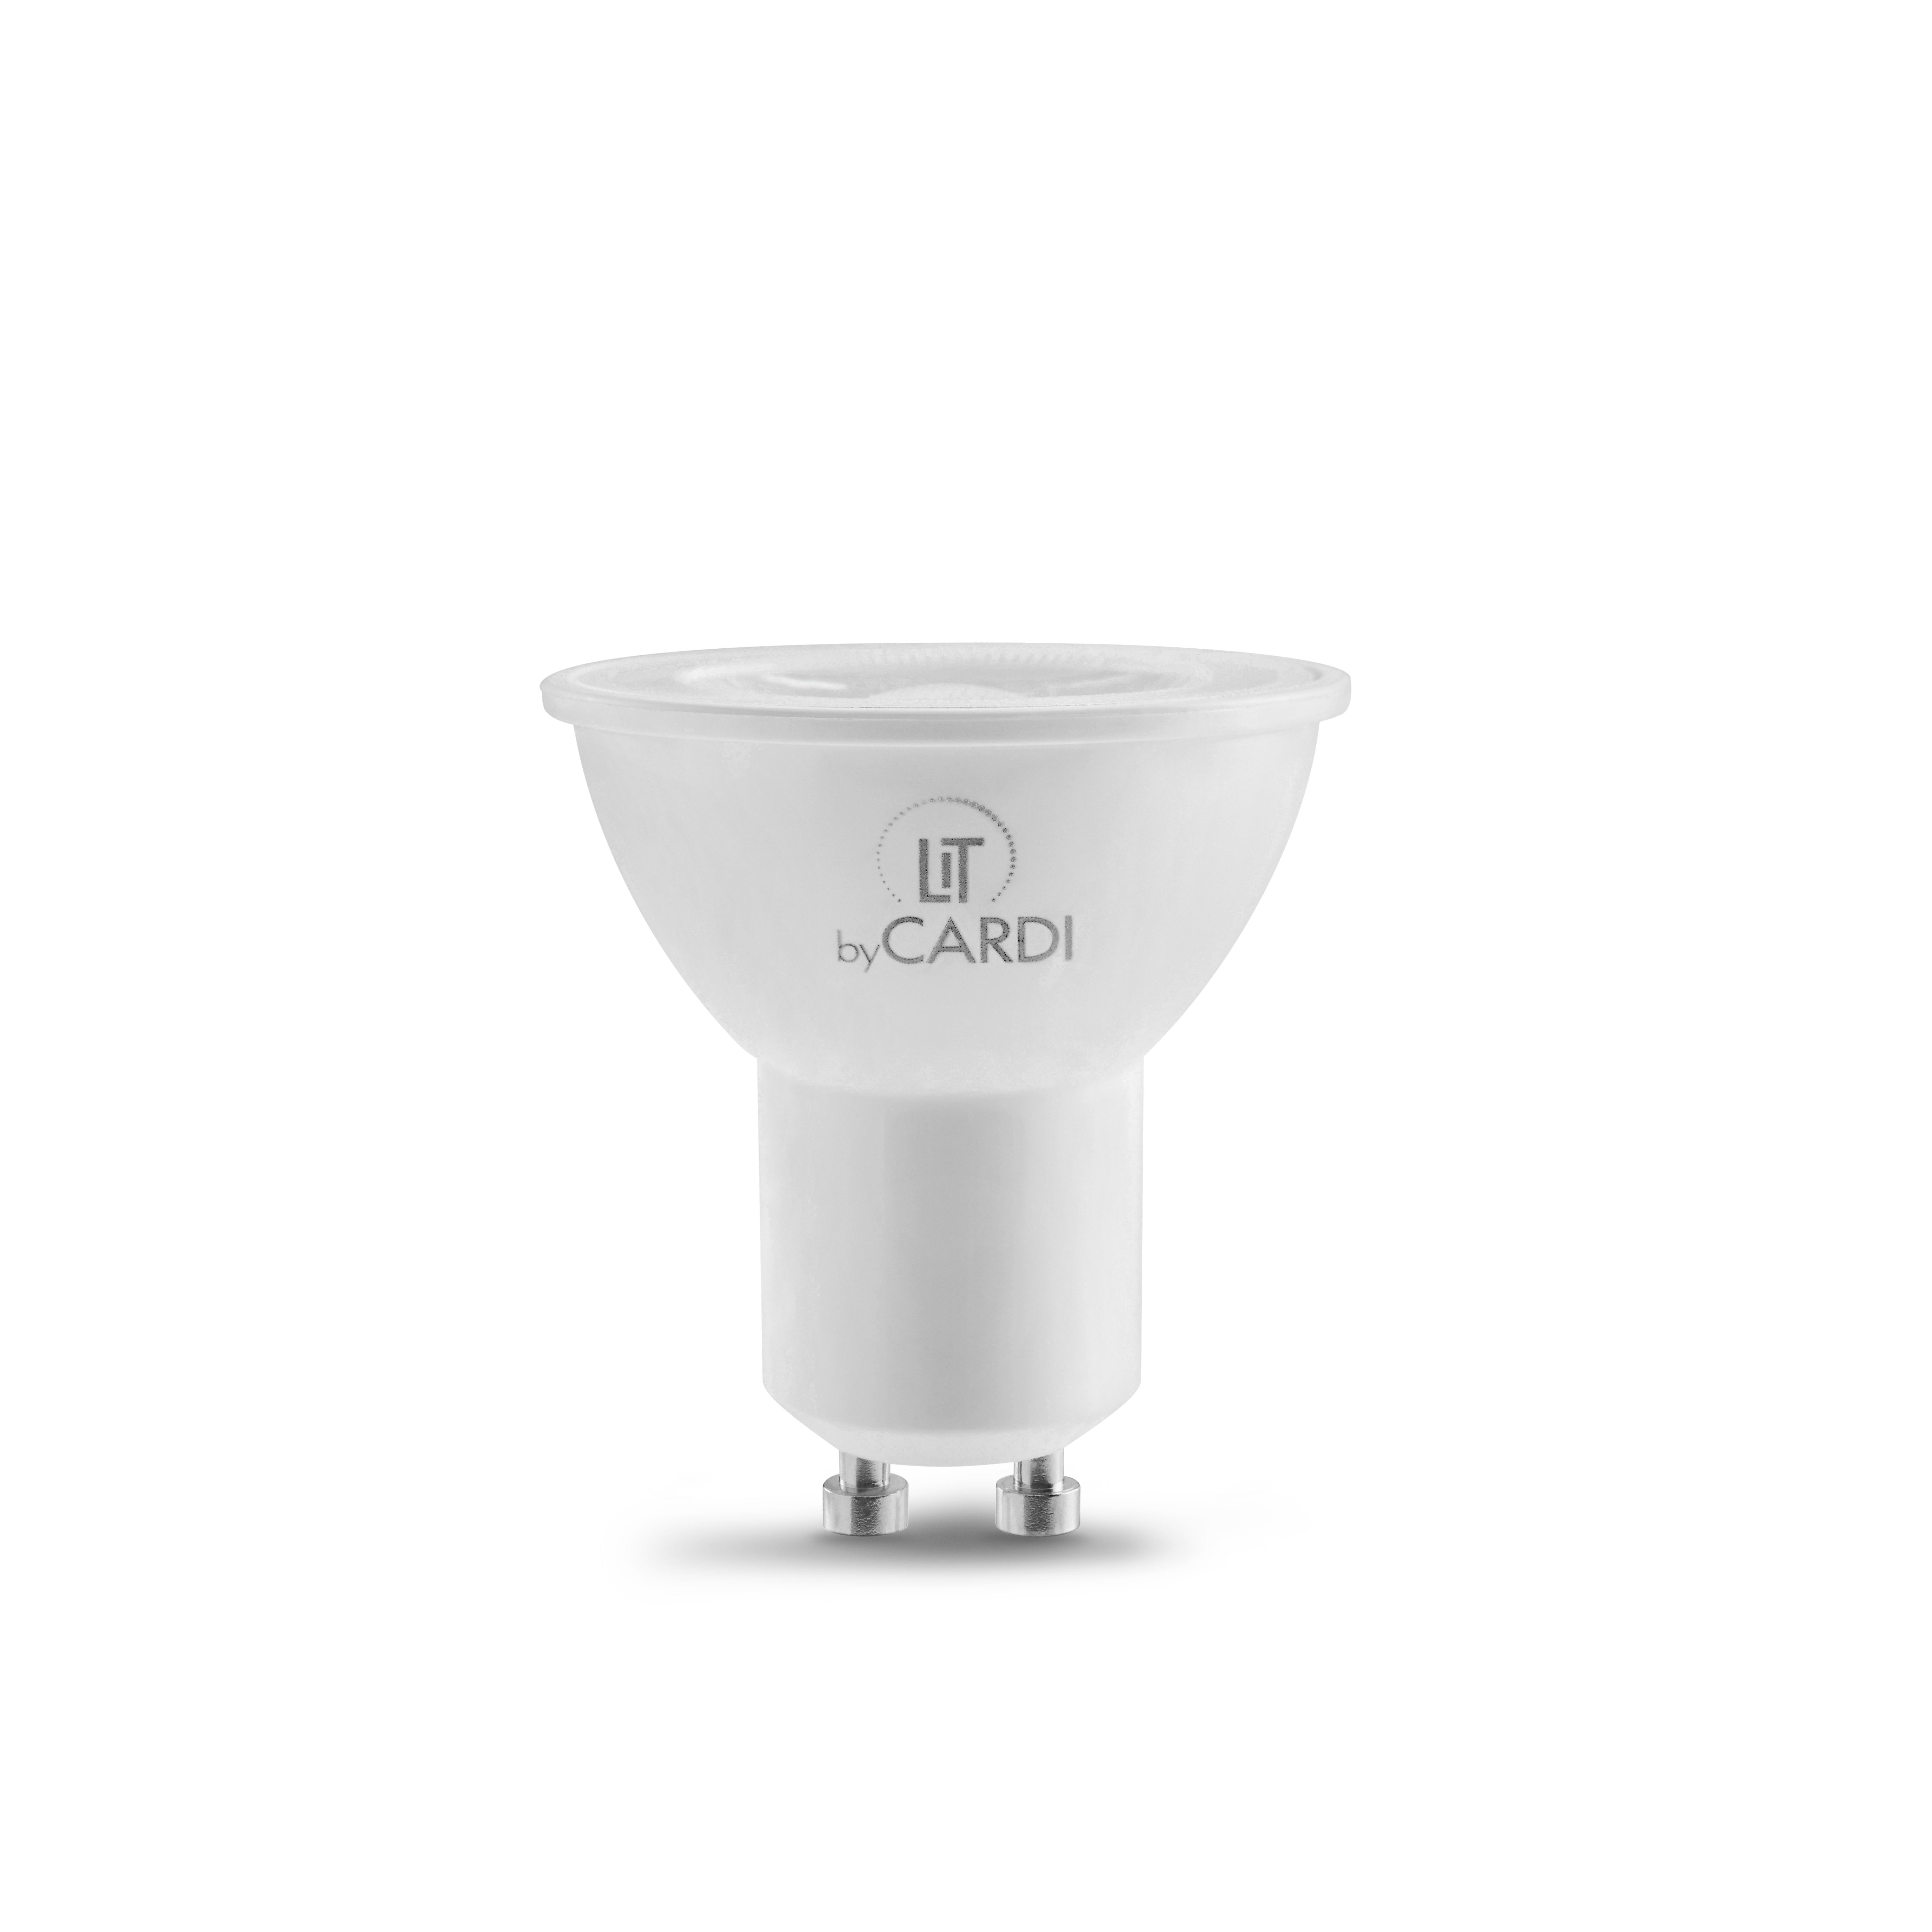 LAMPE LED E27 10.8W 1150LM 4000K x5p Lit By Cardi